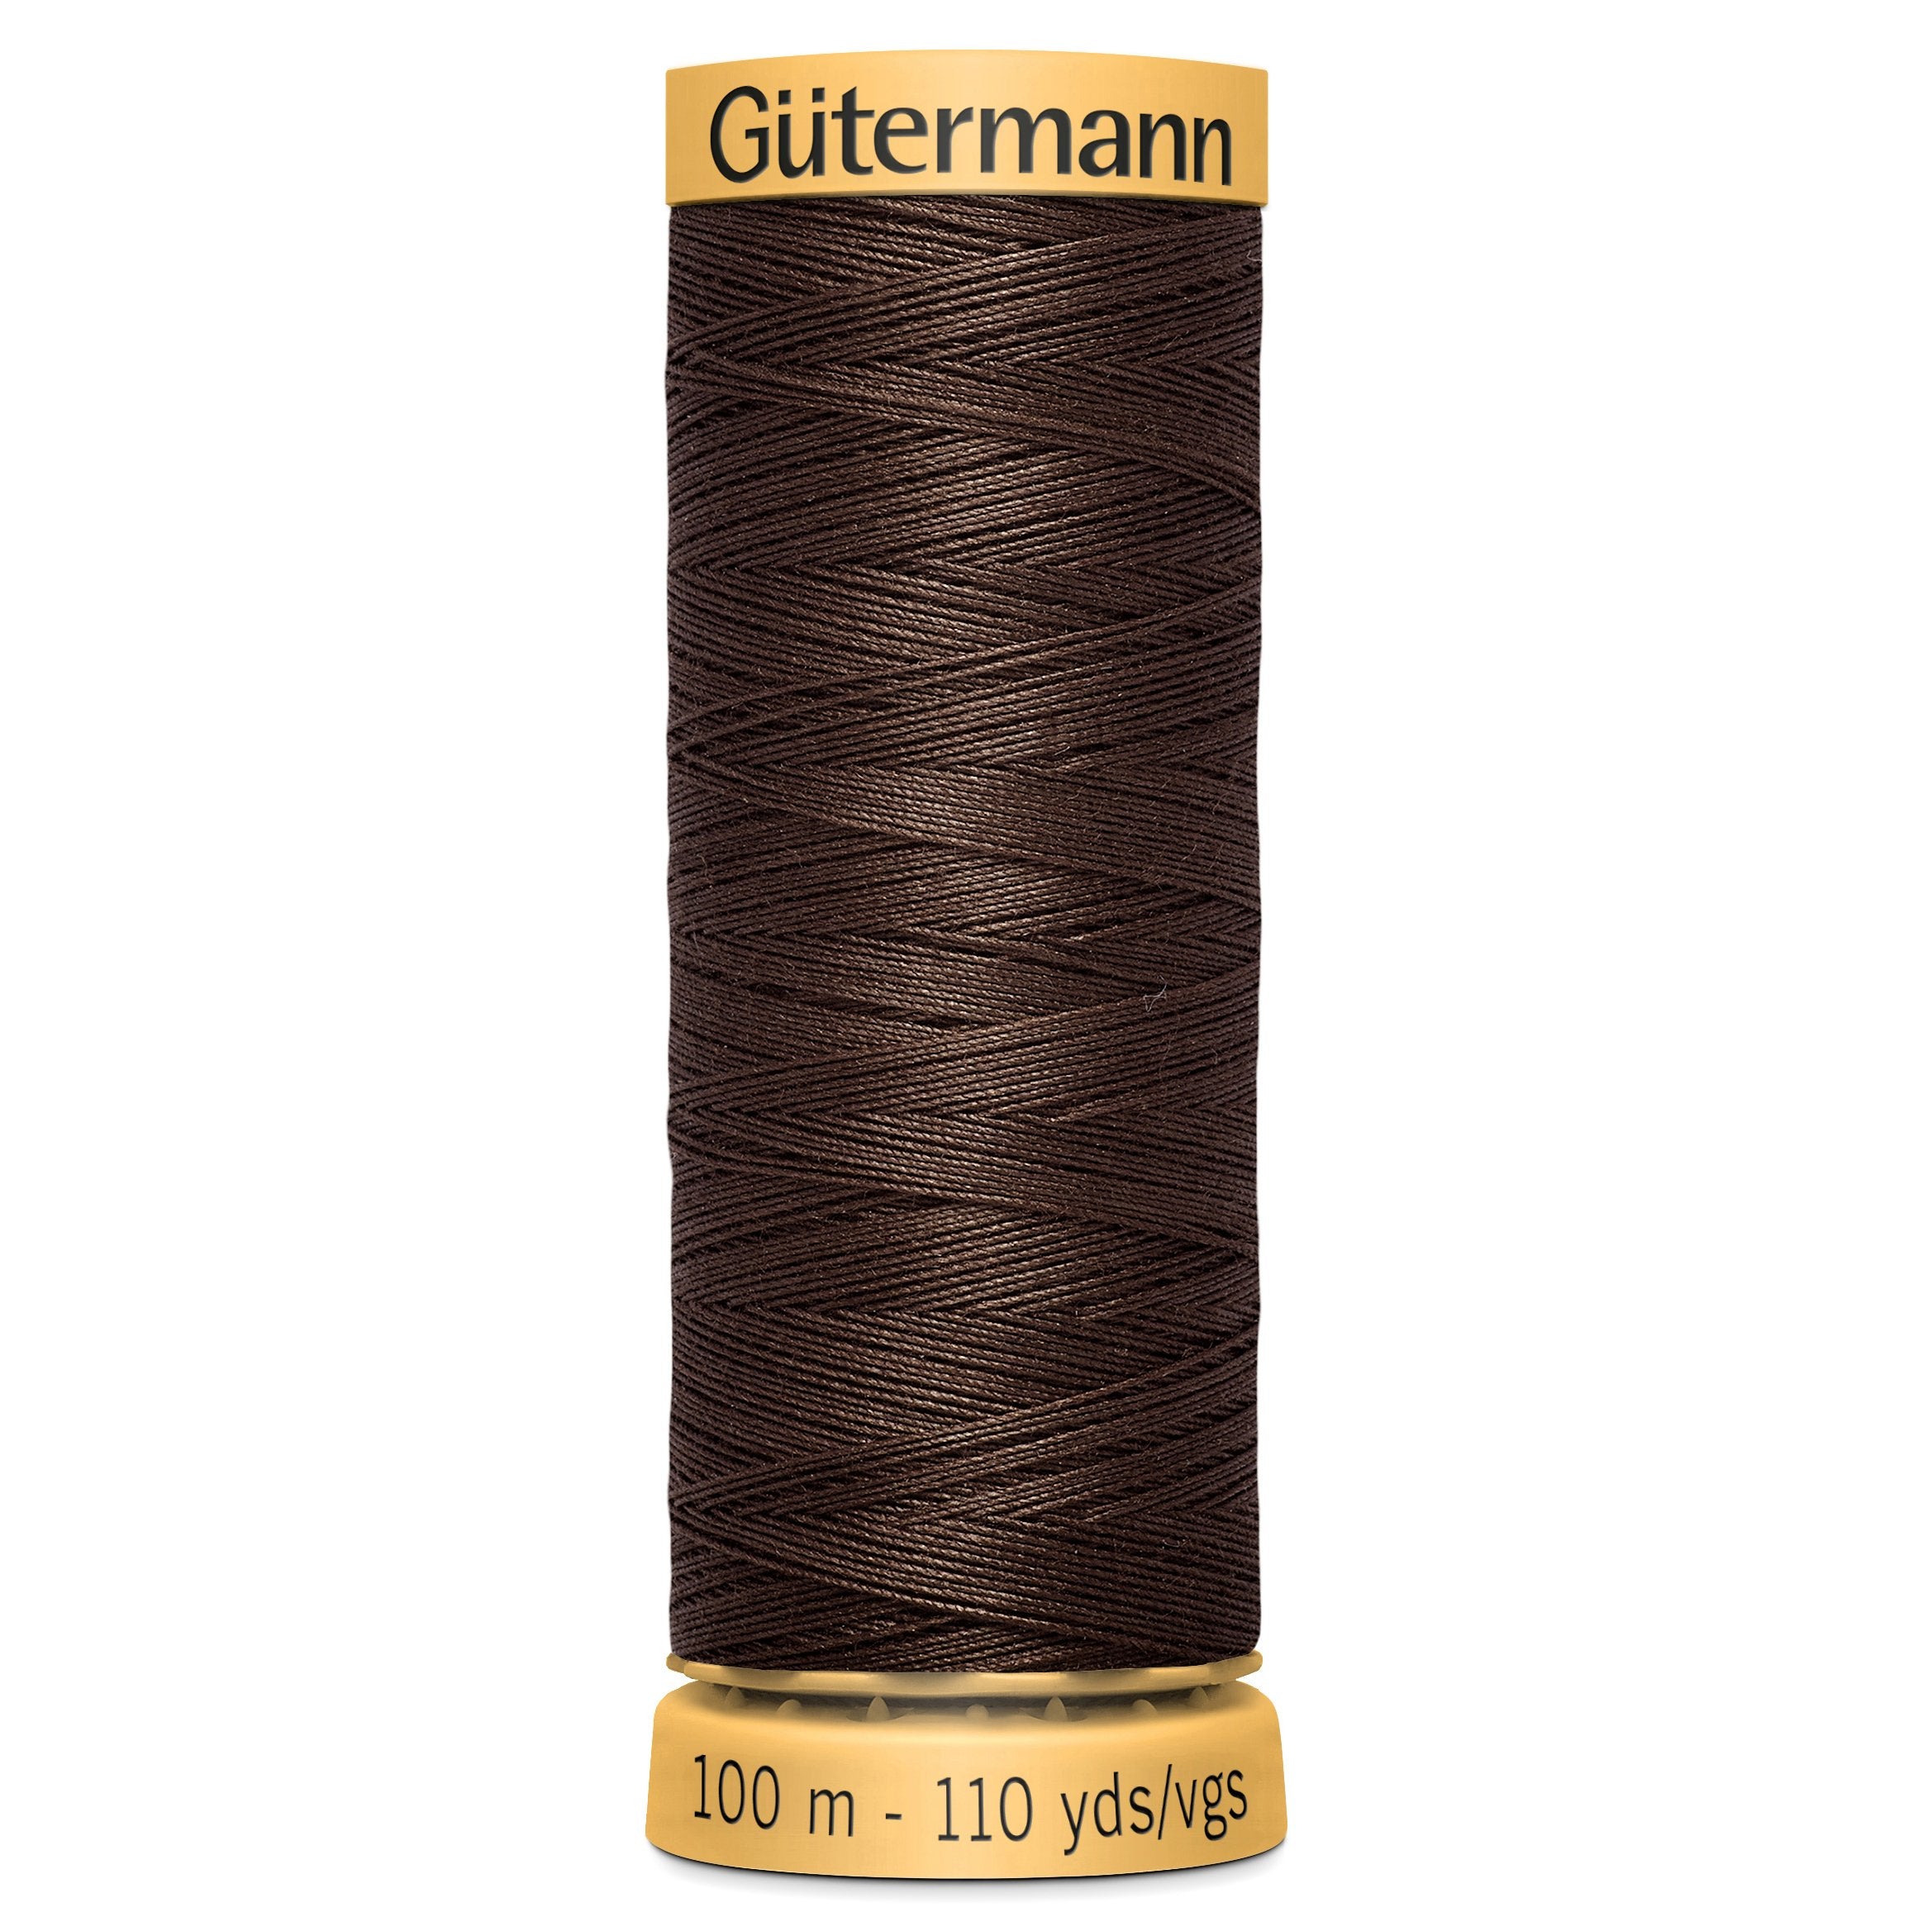 Gutermann Natural Cotton - 1912 dark brown from Jaycotts Sewing Supplies